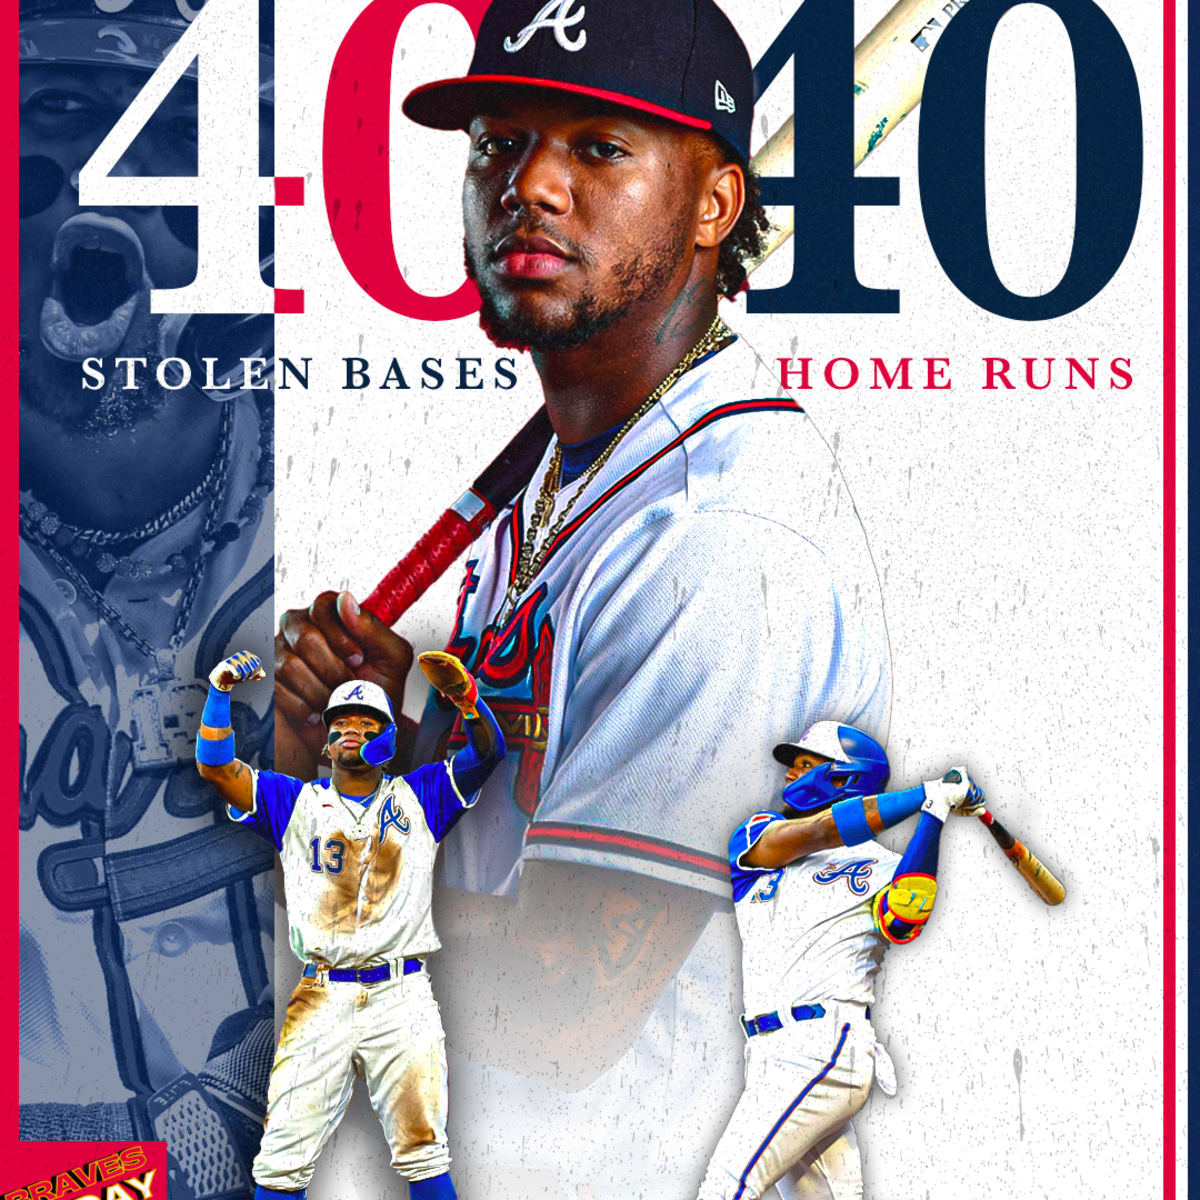 Official ronald Acuna Jr 40 Home Runs Atlanta Braves Poster shirt